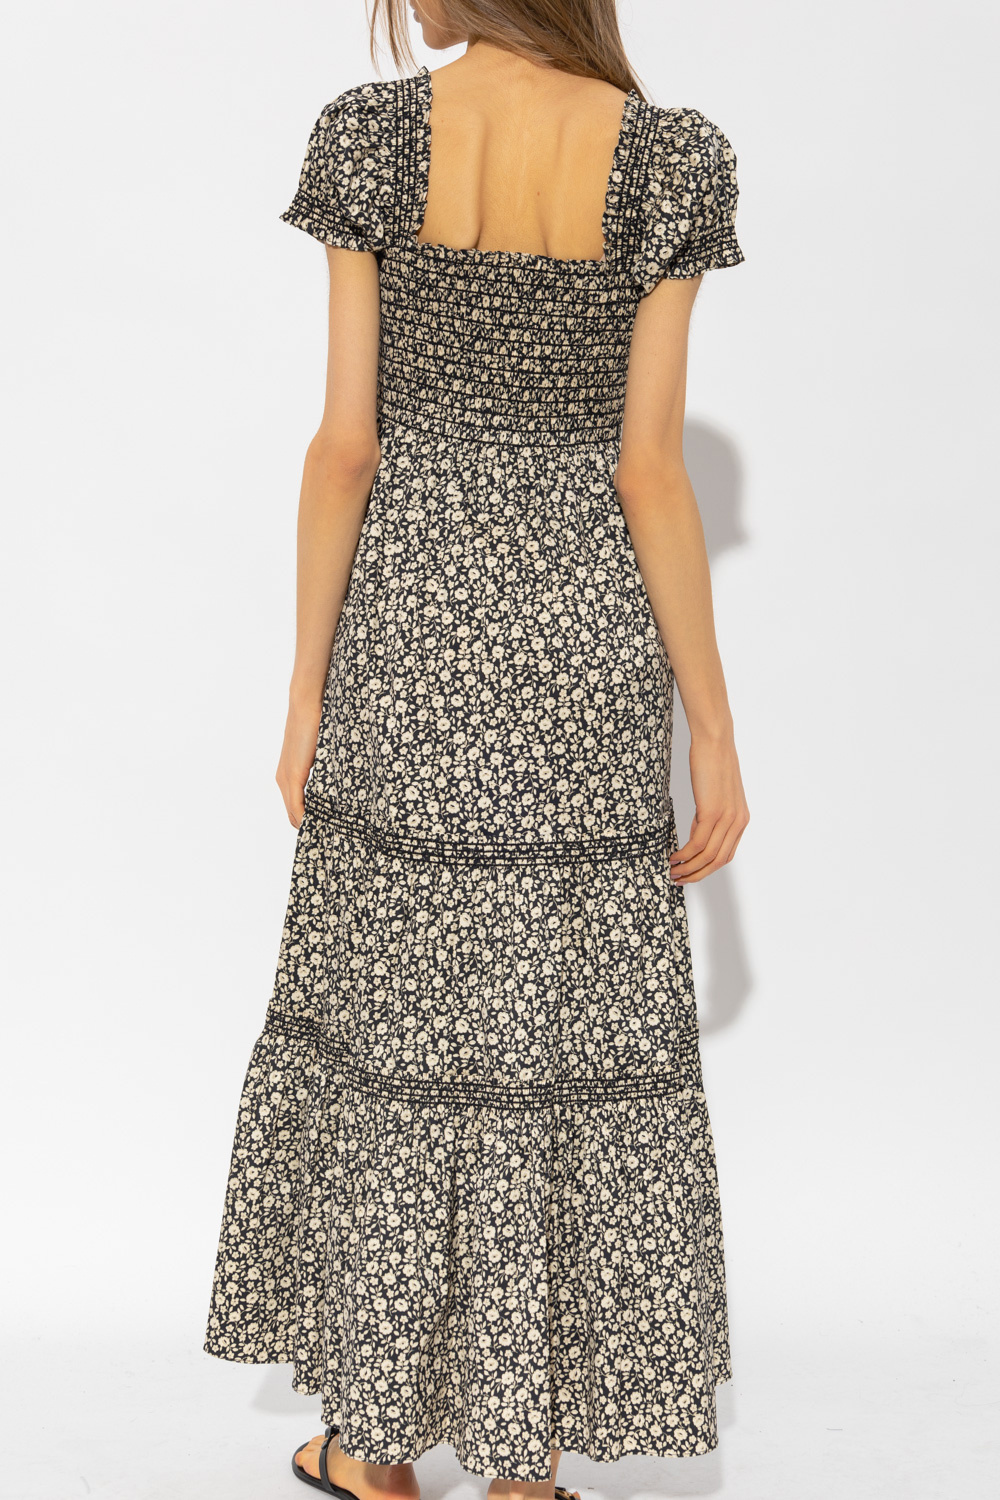 Tory Burch Dress with floral motif | Women's Clothing | Vitkac